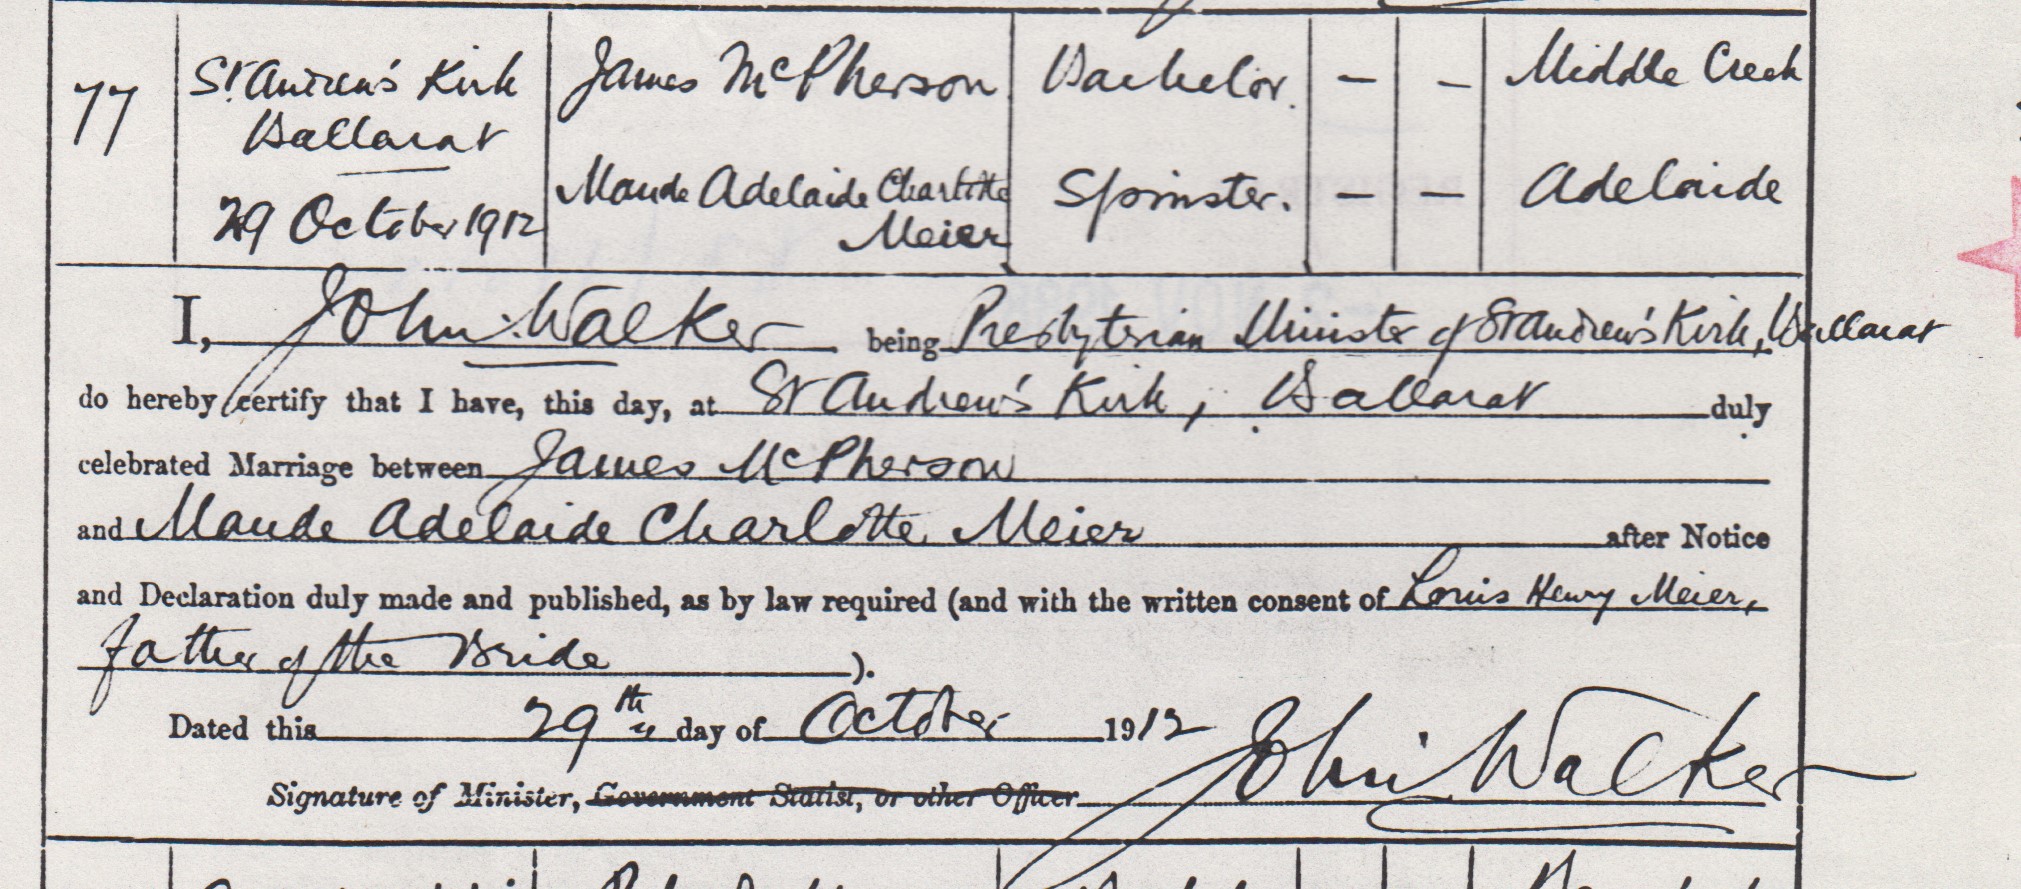 James McPherson marriage certificate part 1